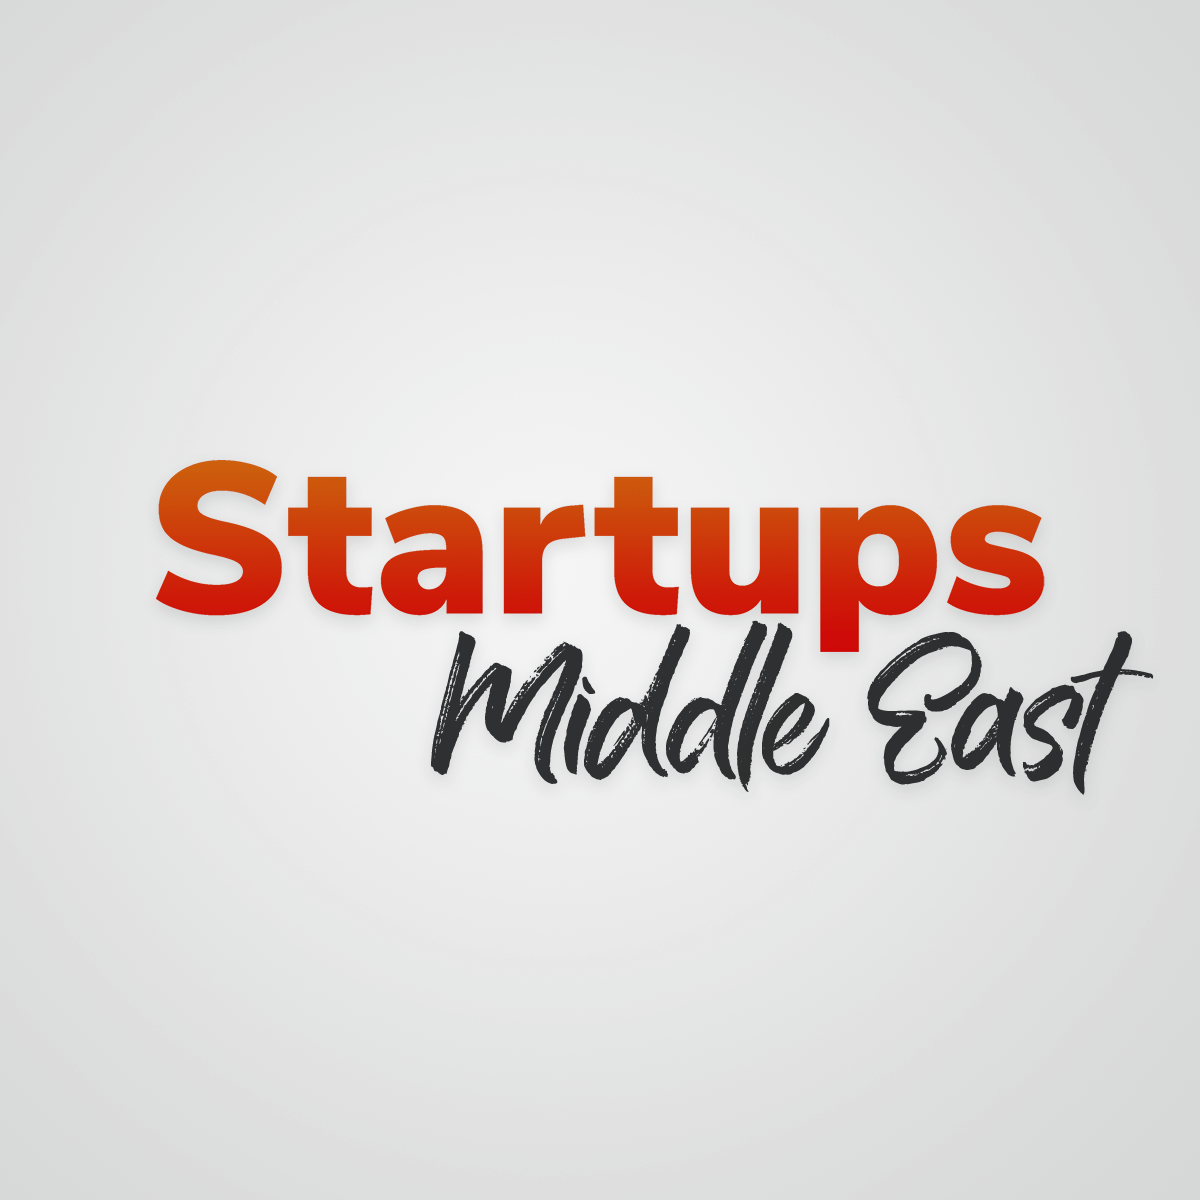 Startups Middle East